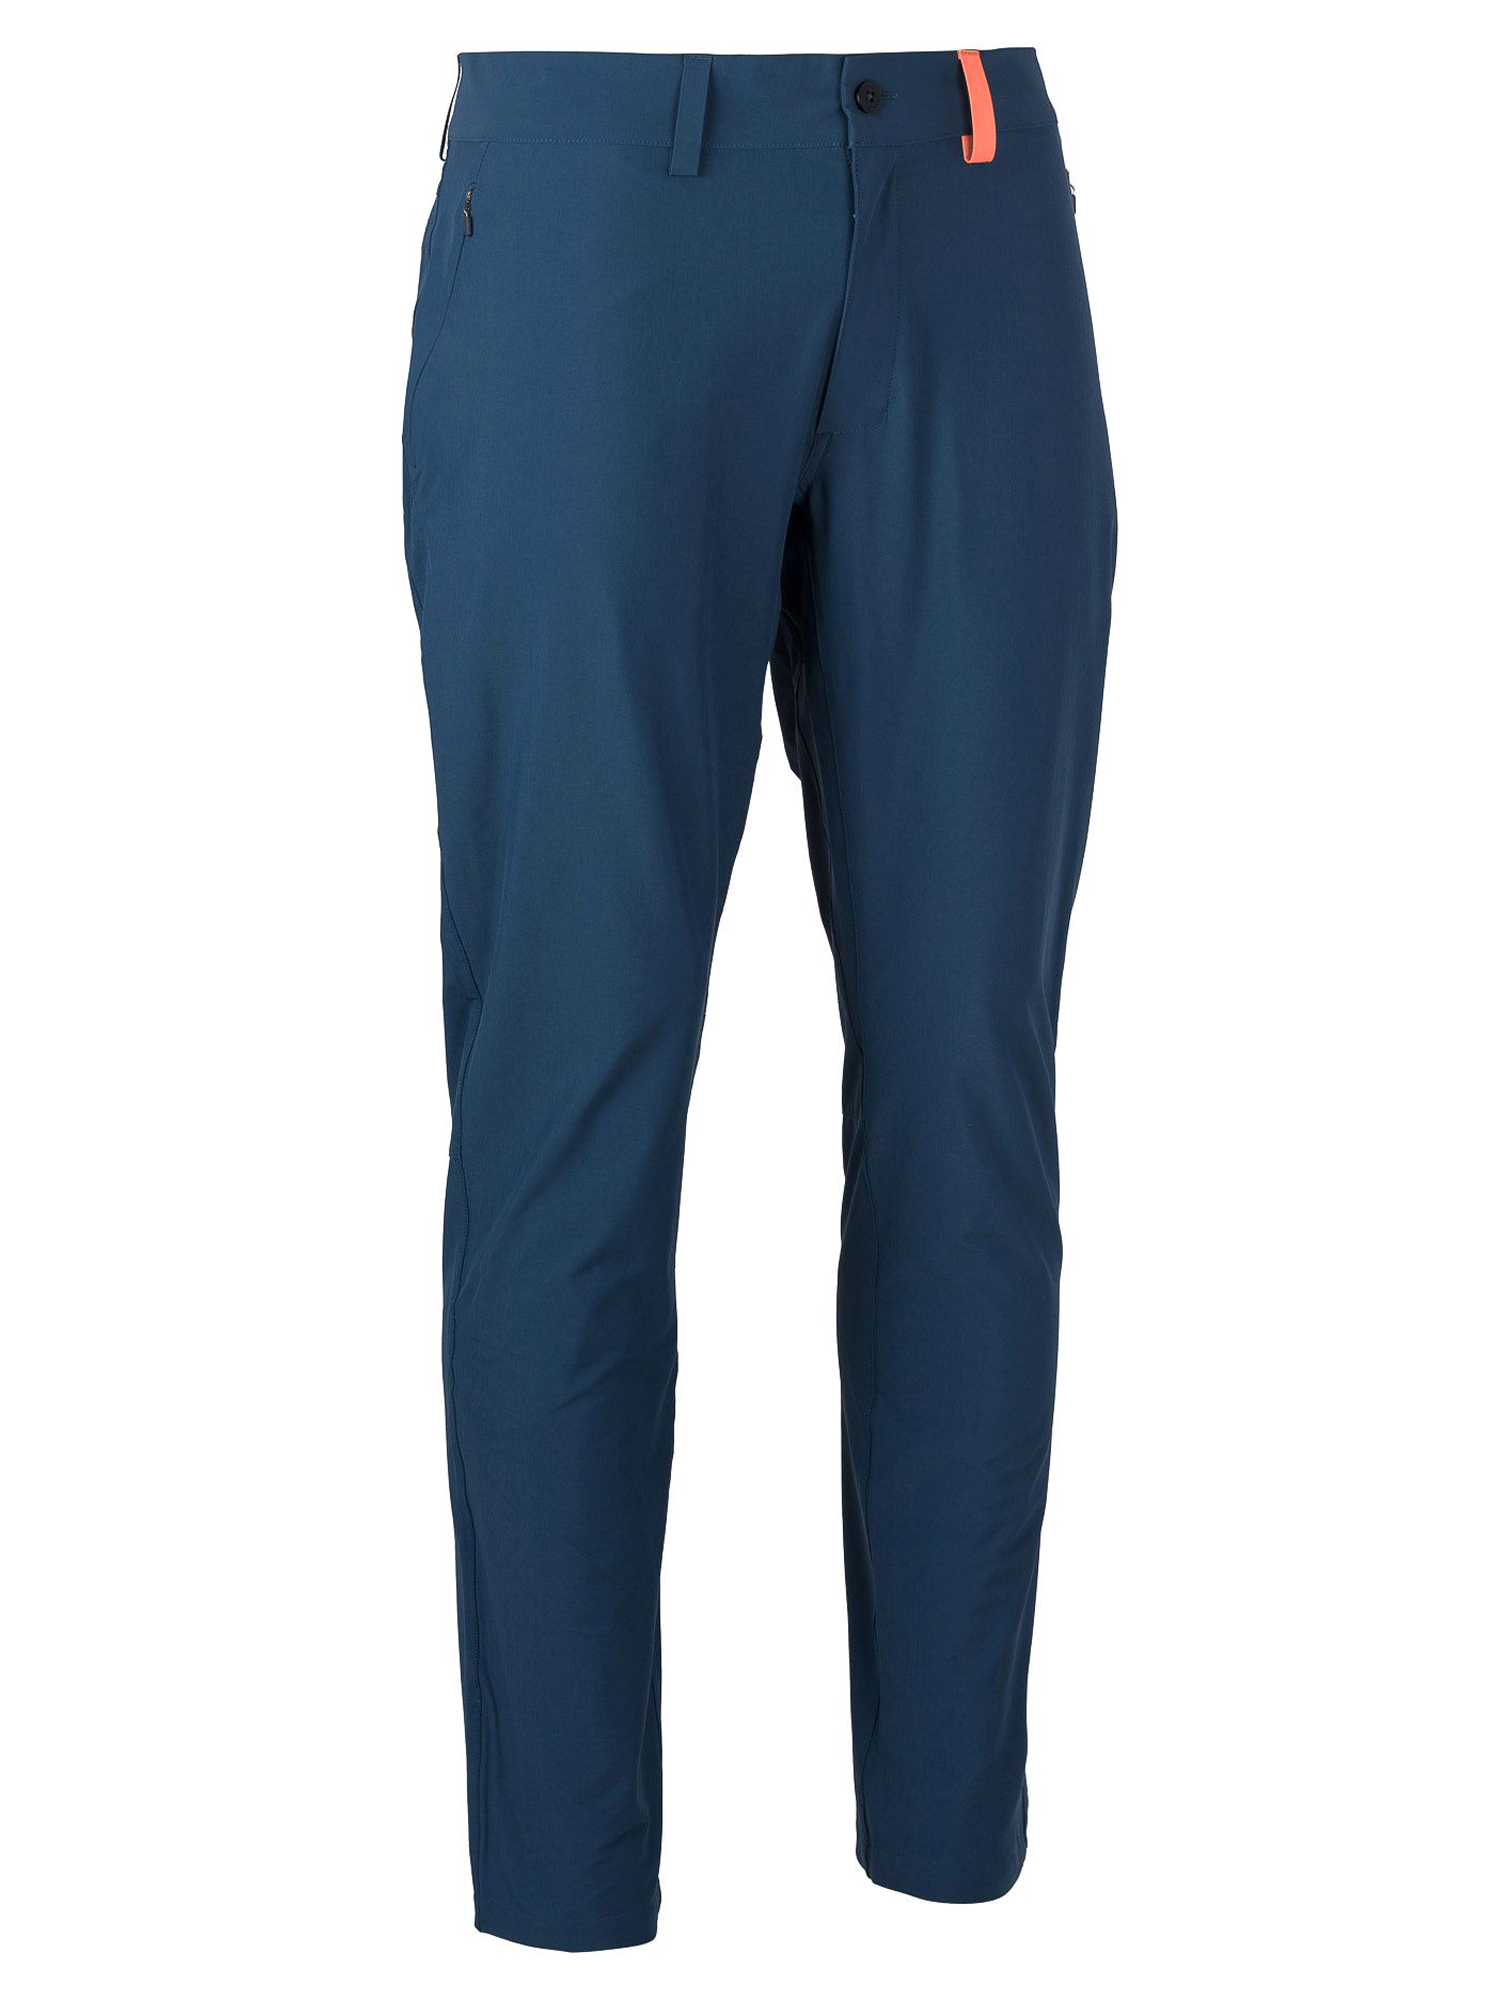 Спортивные брюки мужские Ternua Terra Pt M синие L